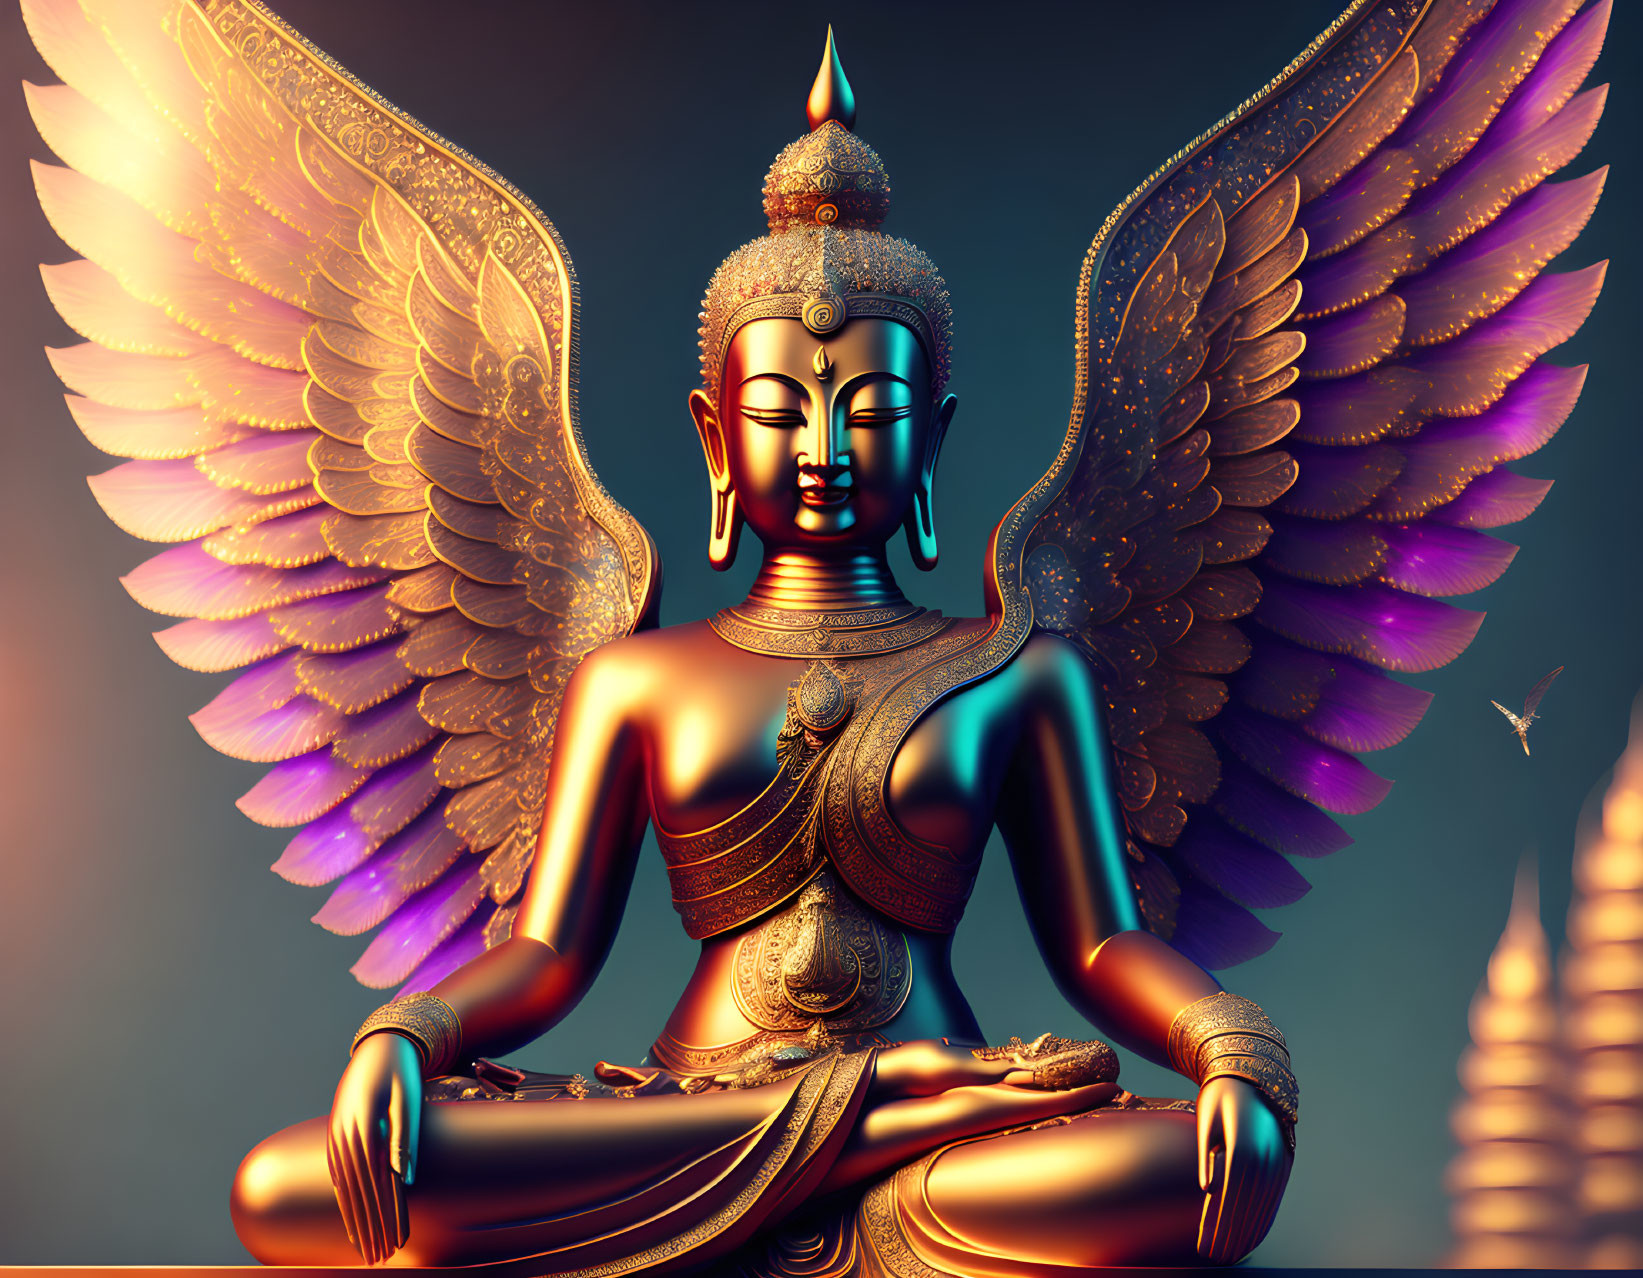 The cosmic Buddha